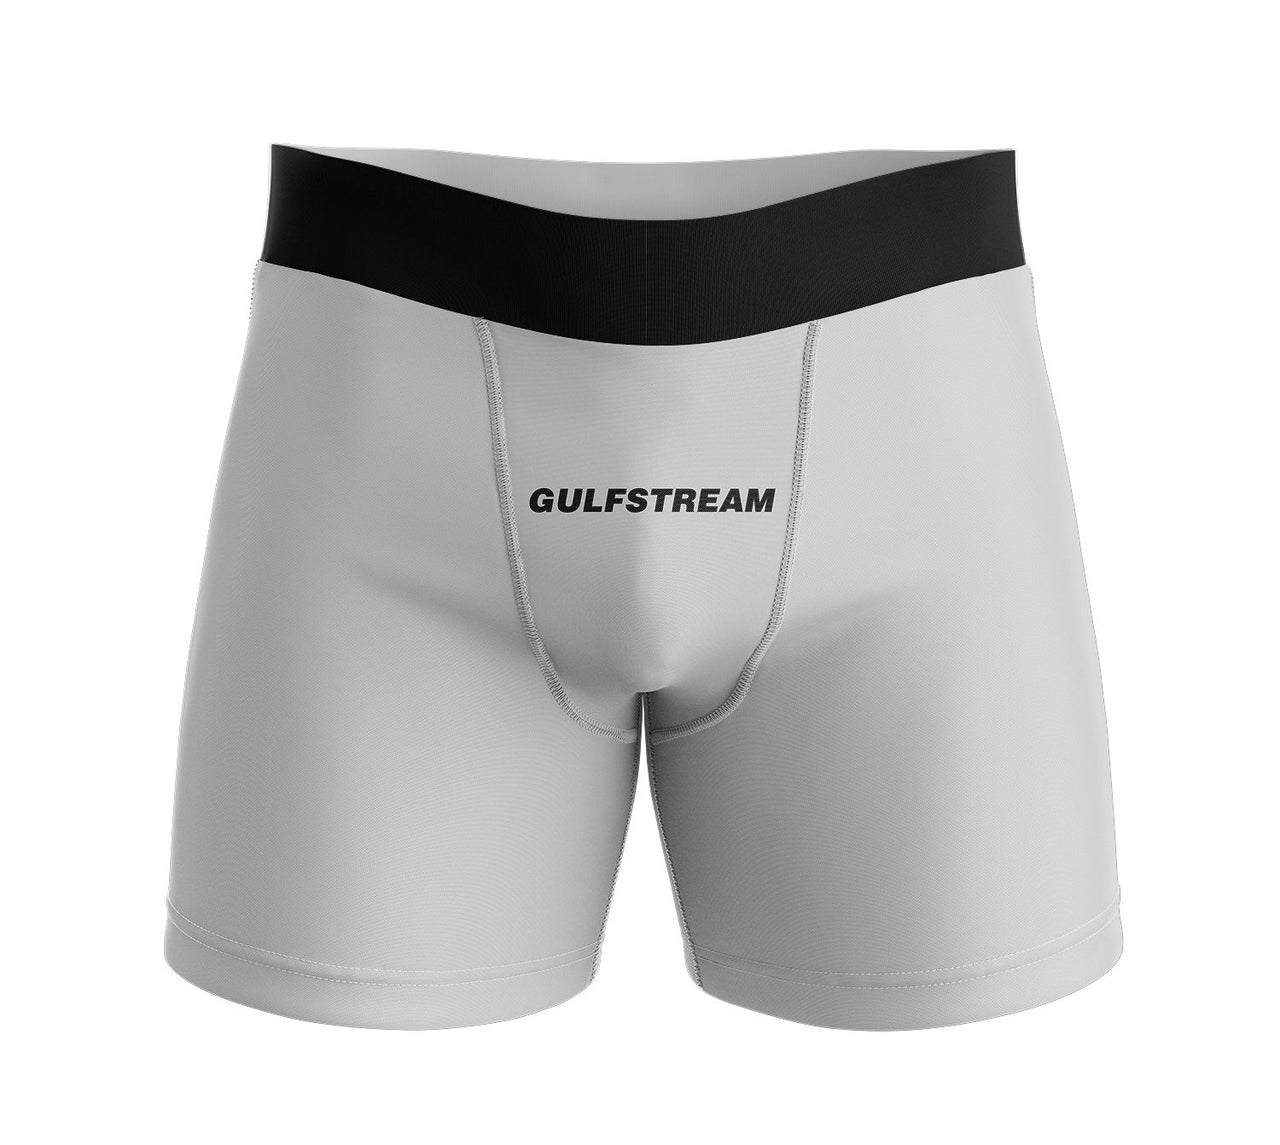 Gulfstream & Text Designed Men Boxers